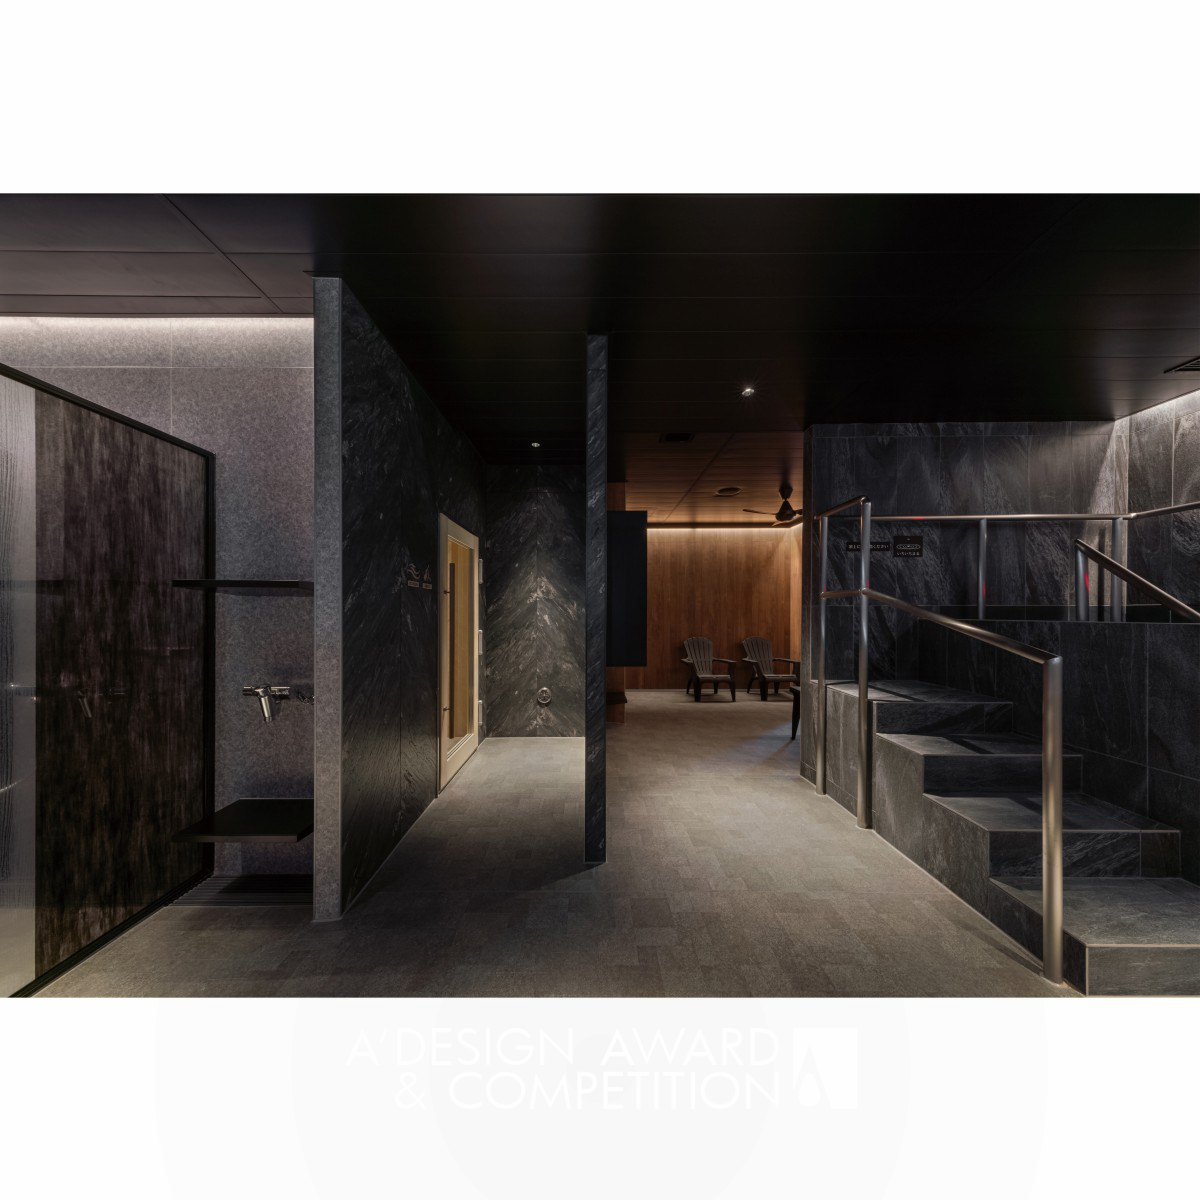 SHUNSUKE OHE wins Silver at the prestigious A' Interior Space, Retail and Exhibition Design Award with Wagamachi Sauna and Bar.